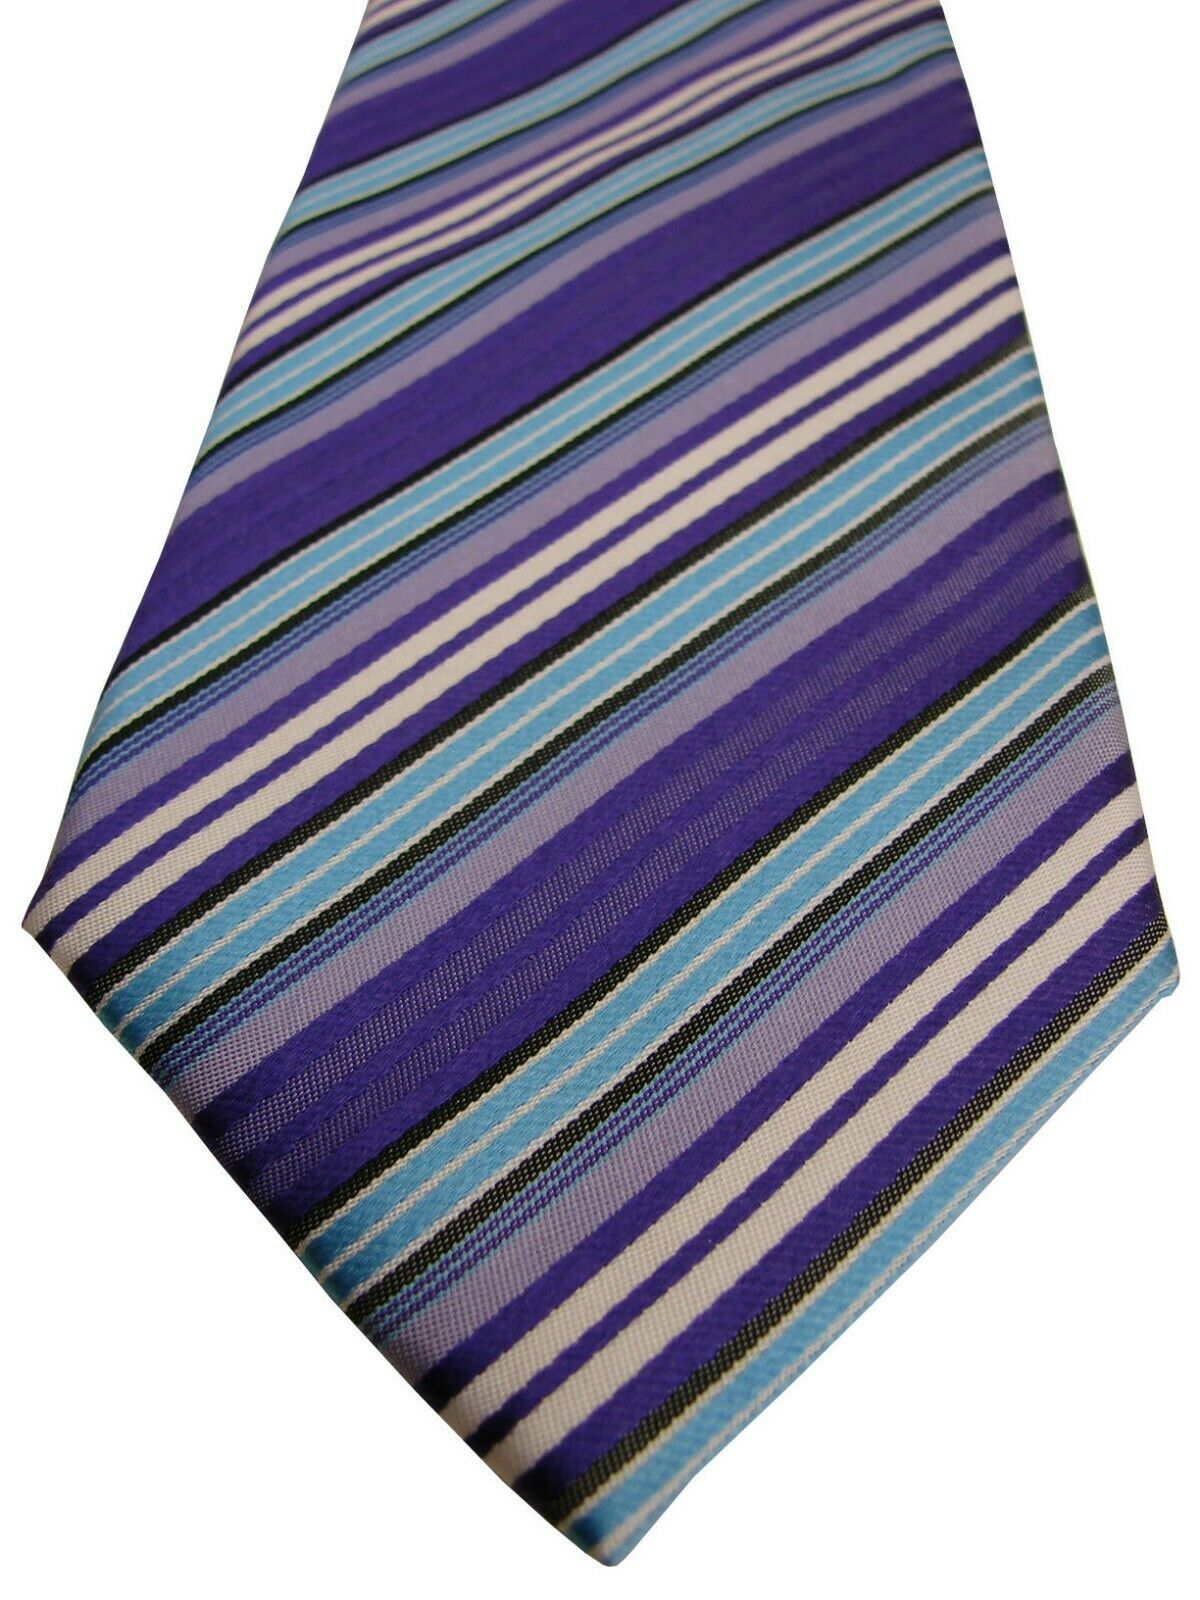 TM LEWIN Mens Tie Purple Blue White Stripes - Brandinity